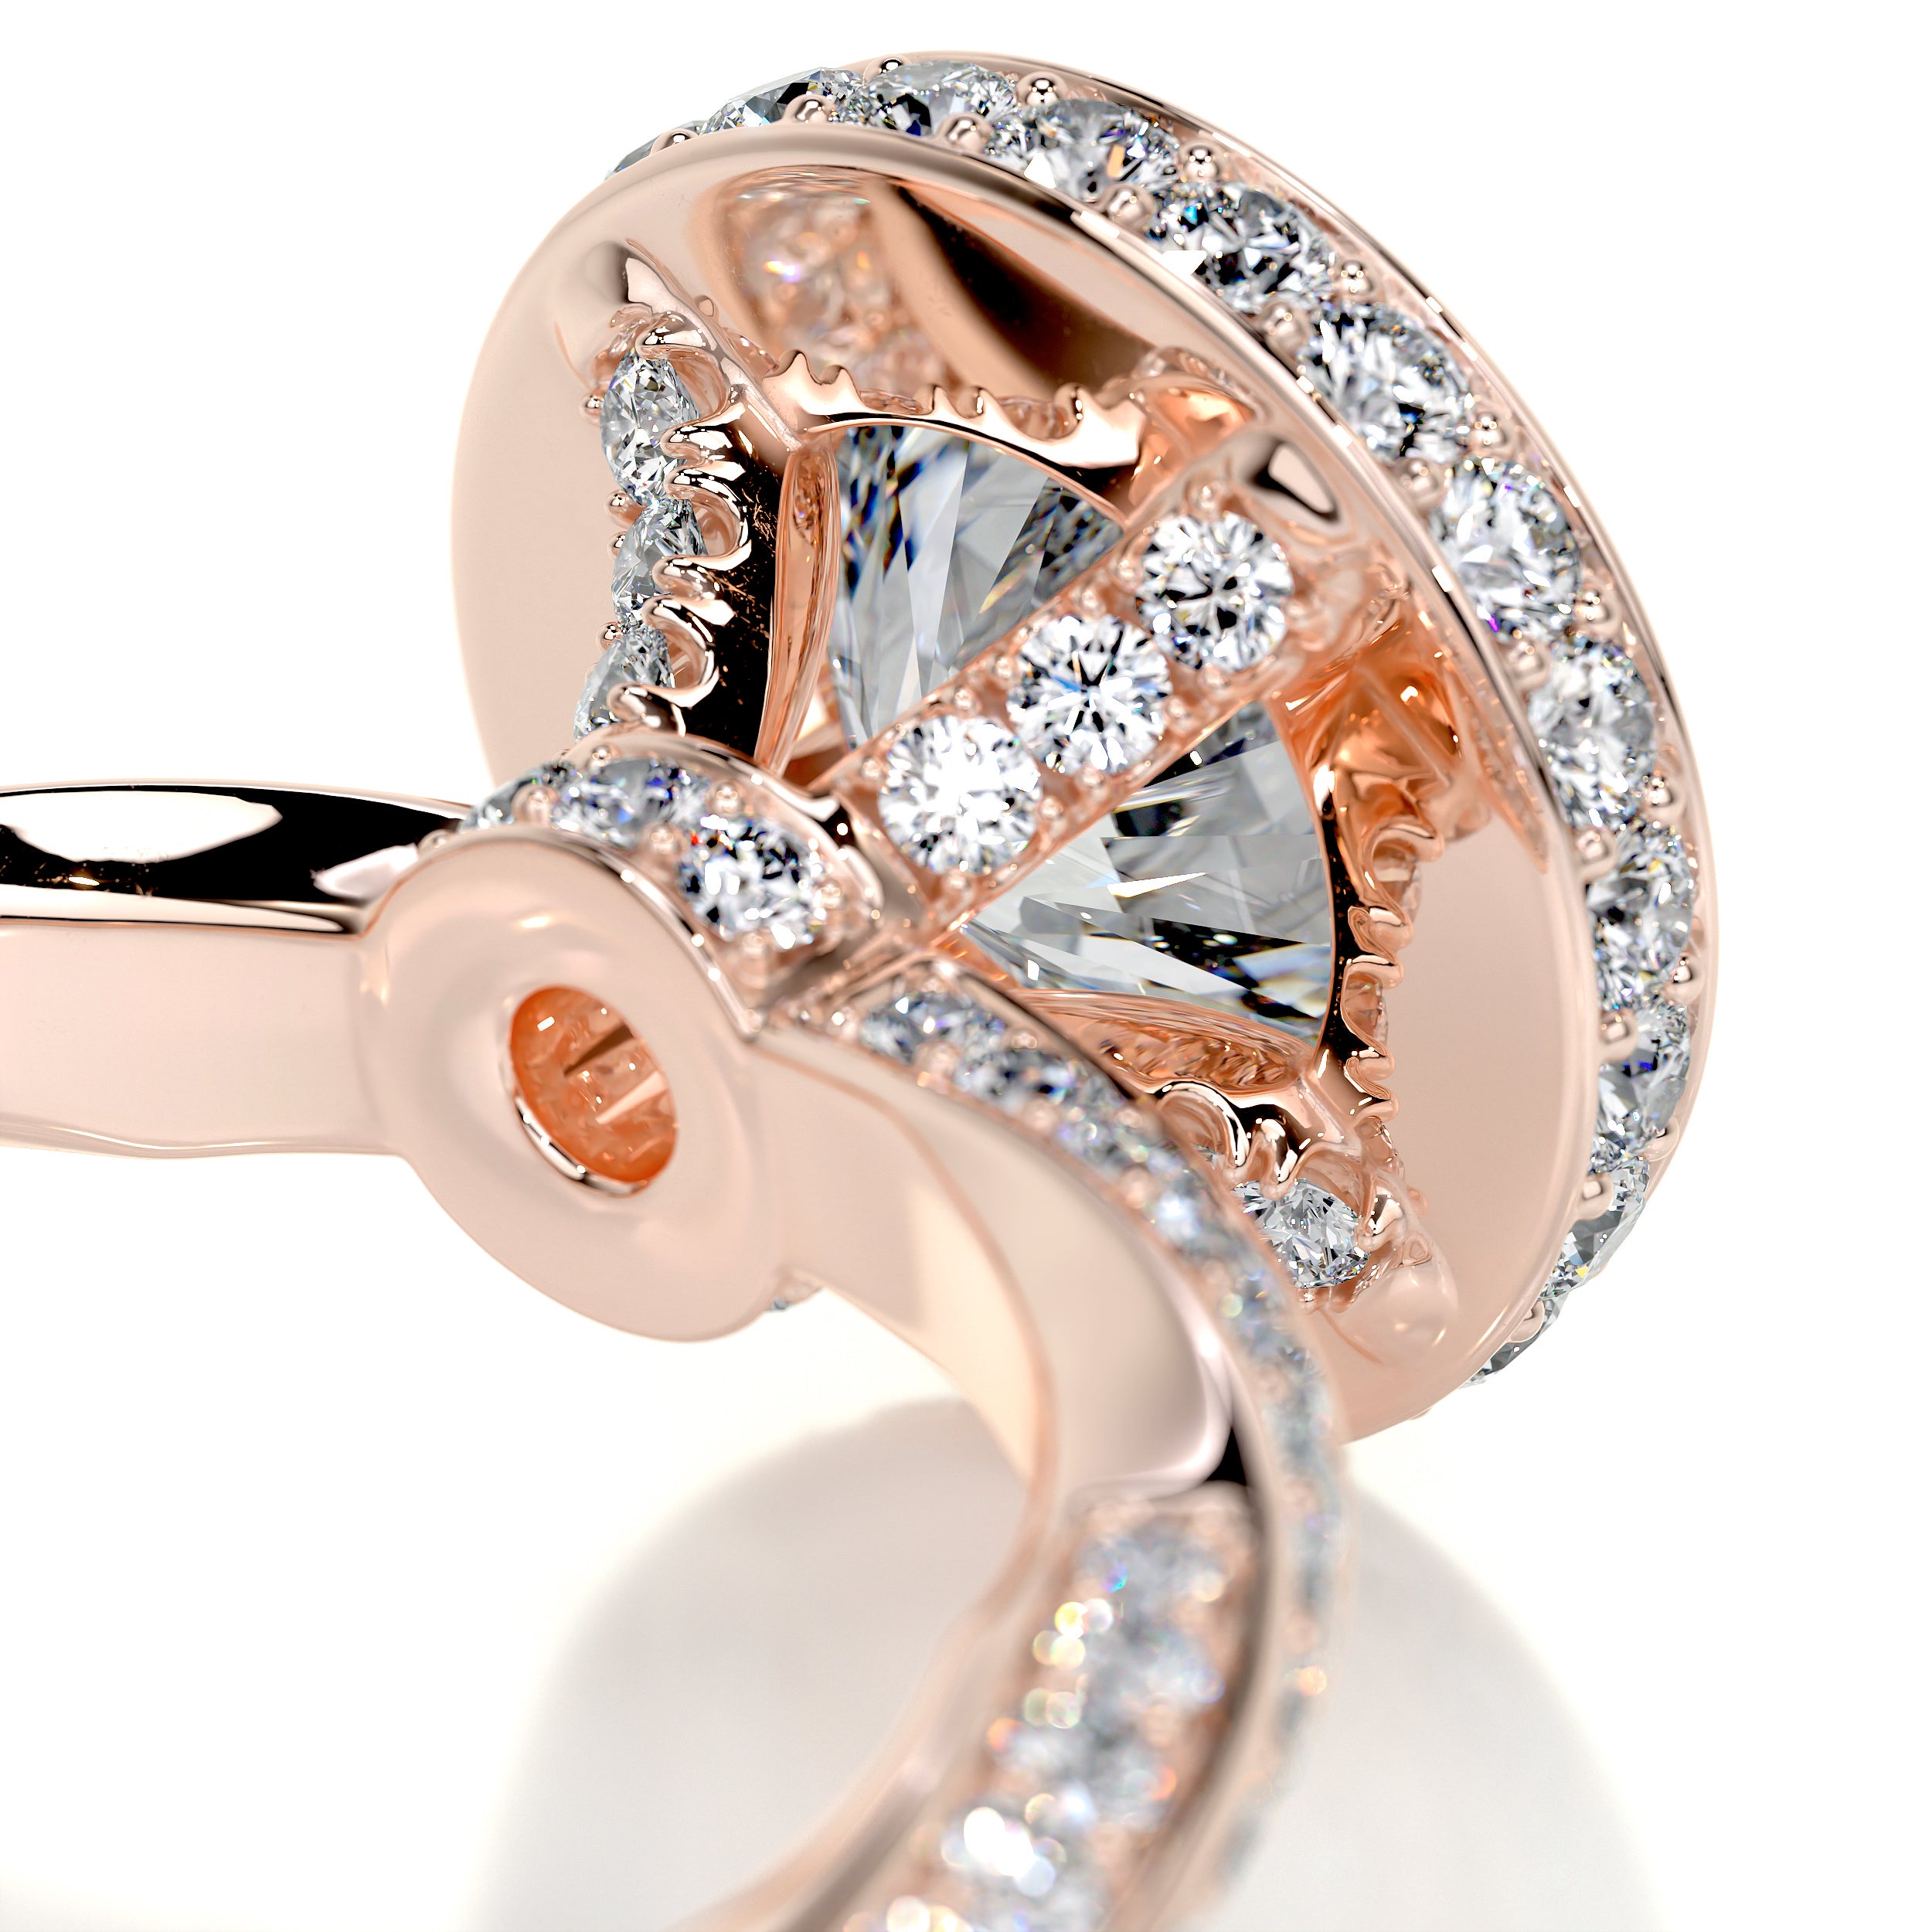 Sarina Diamond Engagement Ring   (1.7 Carat) -14K Rose Gold